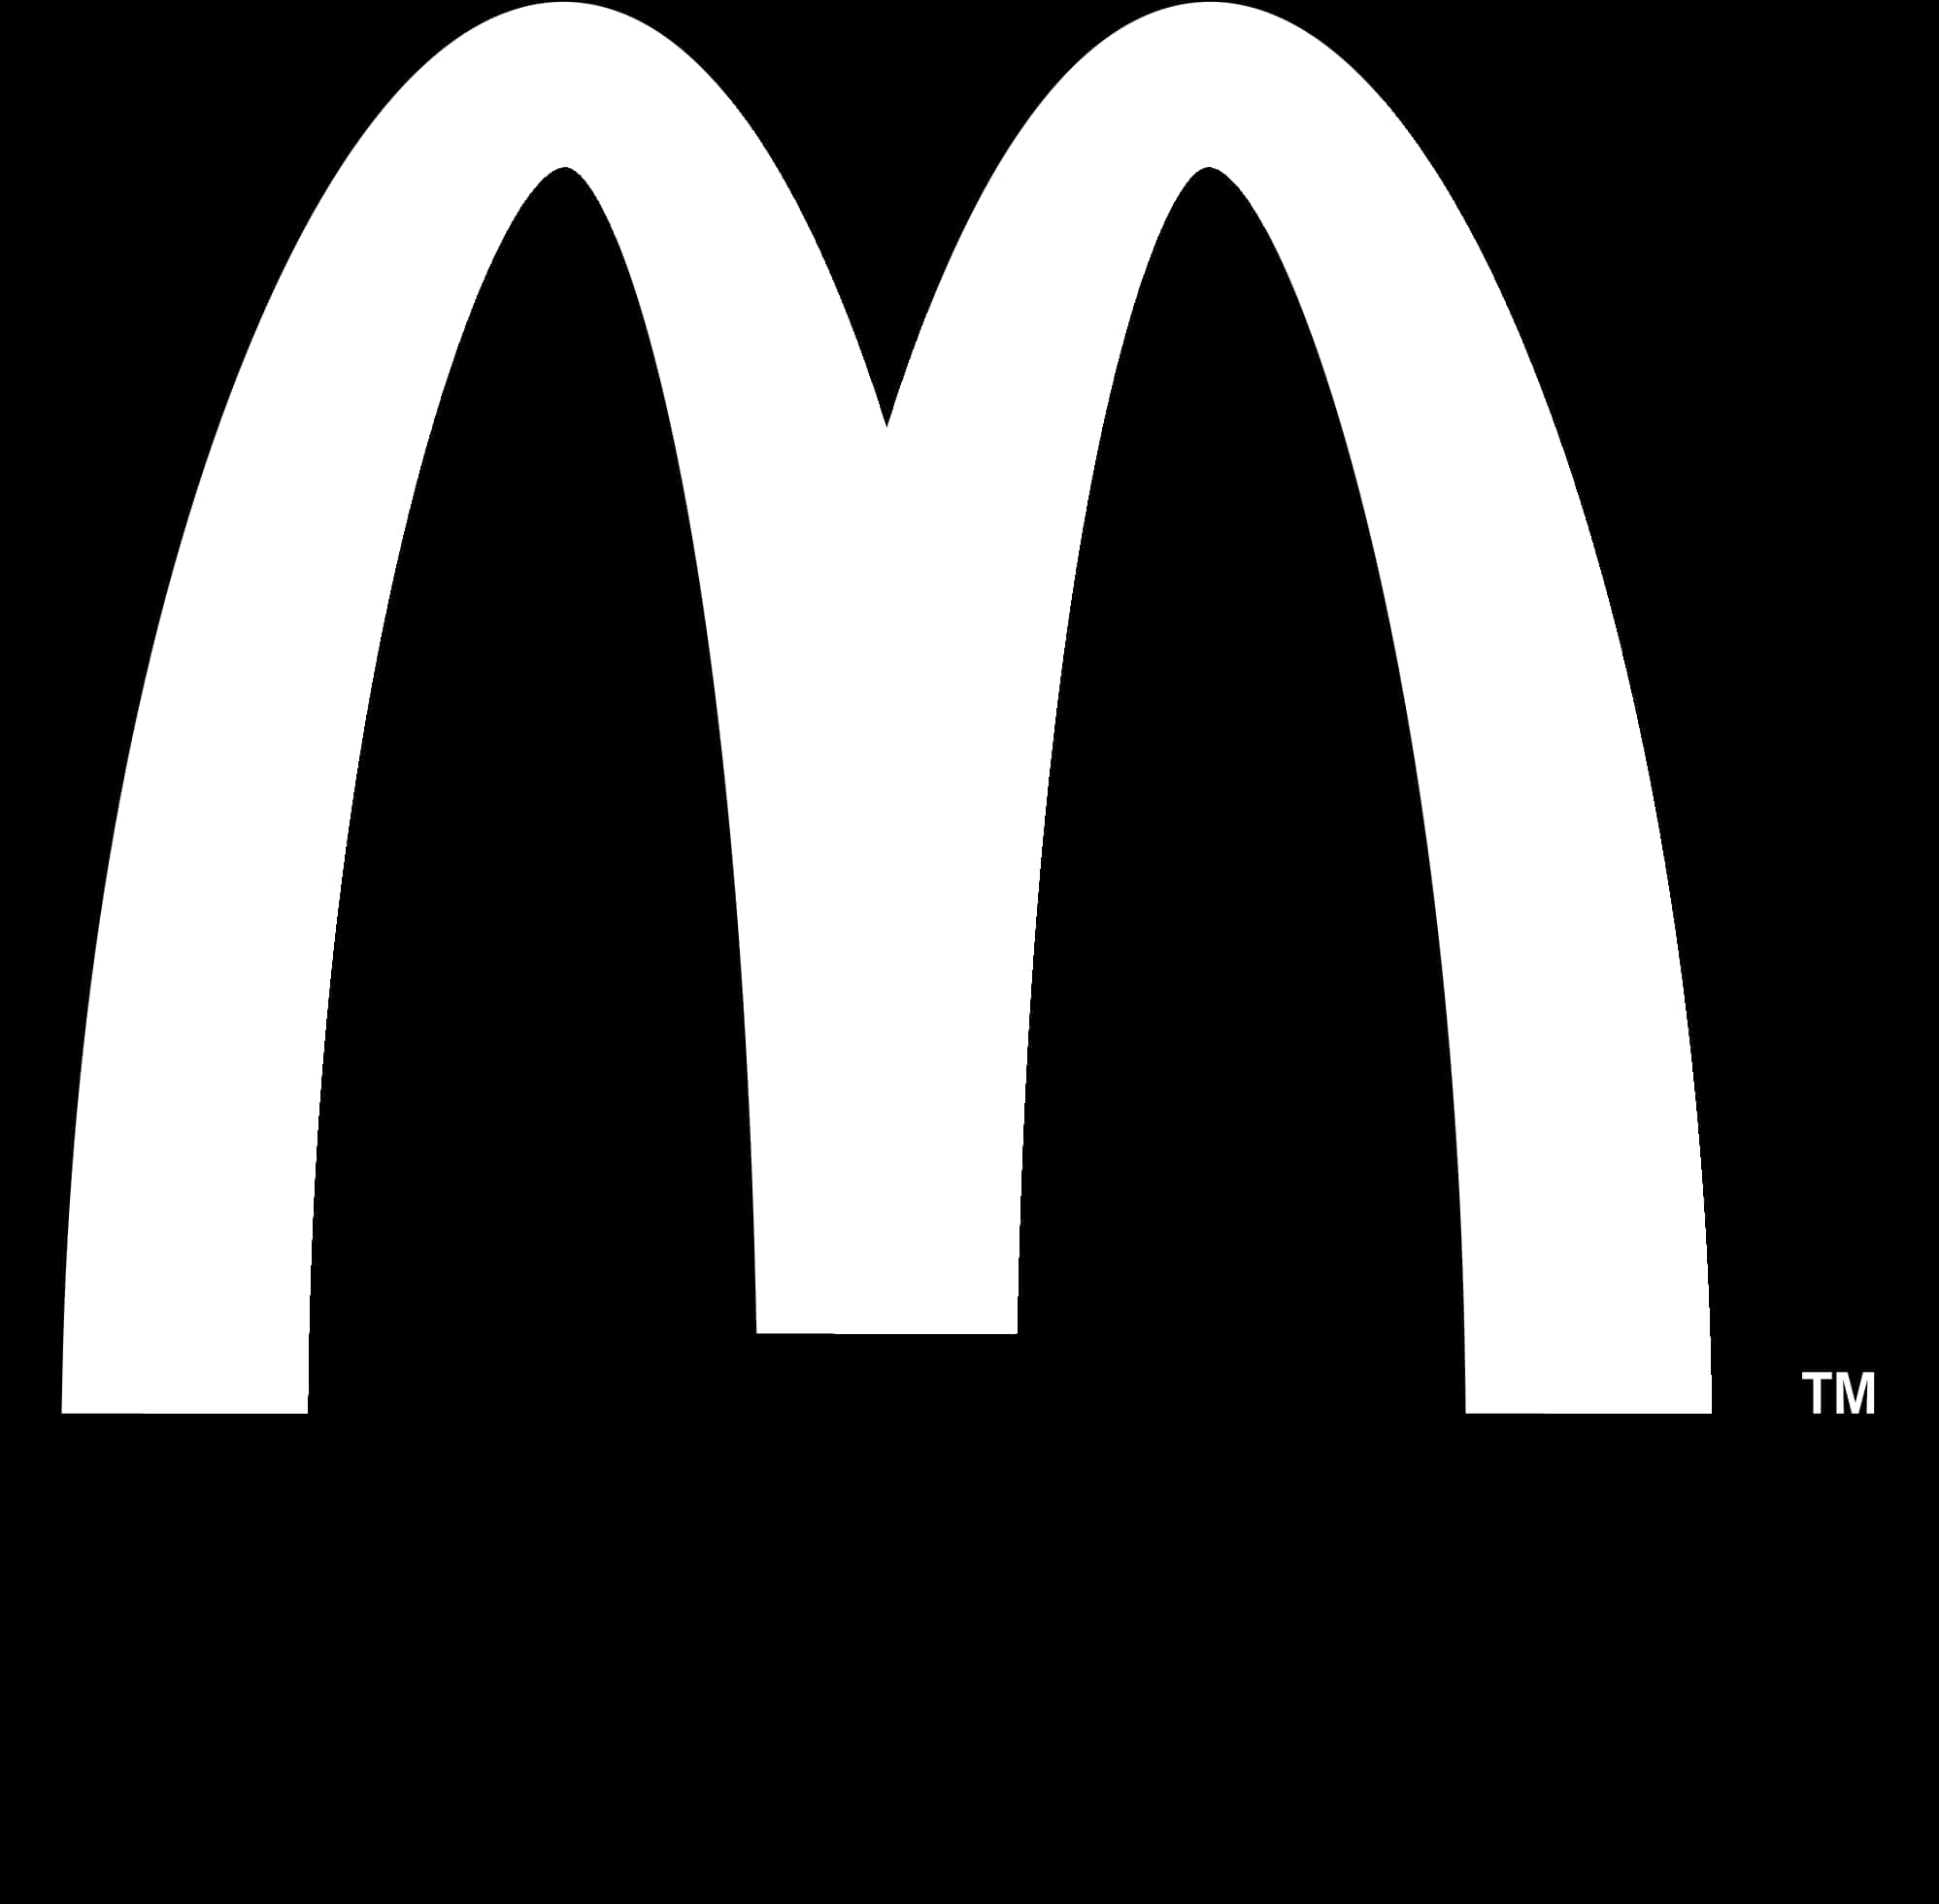 Mc Donalds Iconic Golden Arches Logo